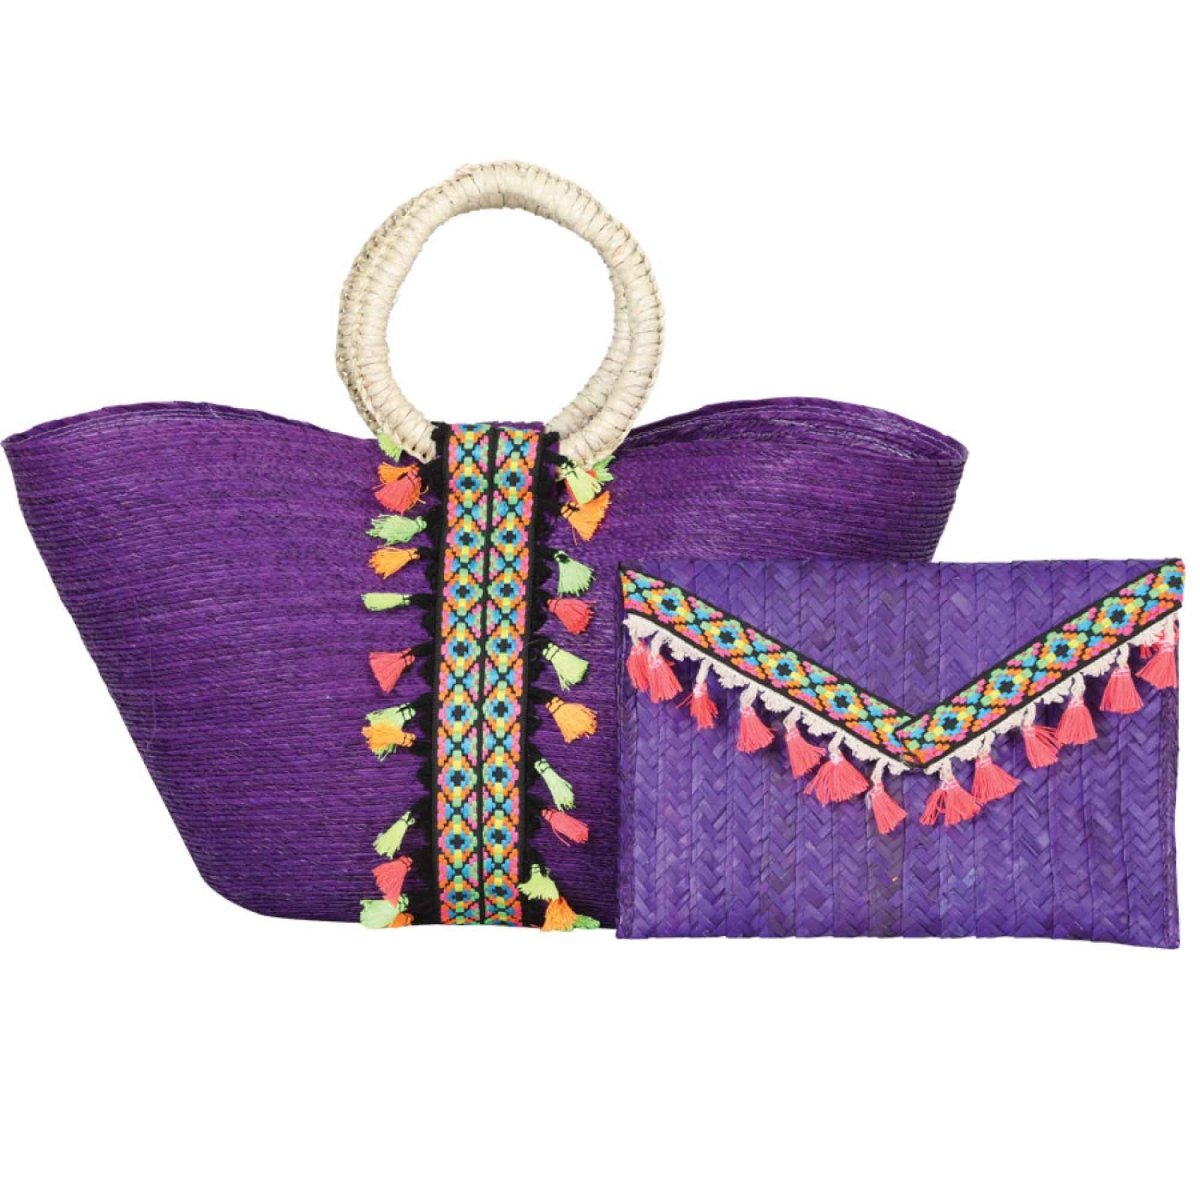 Handmade Artesanal handbag (2 piece set) - CharroAzteca.com